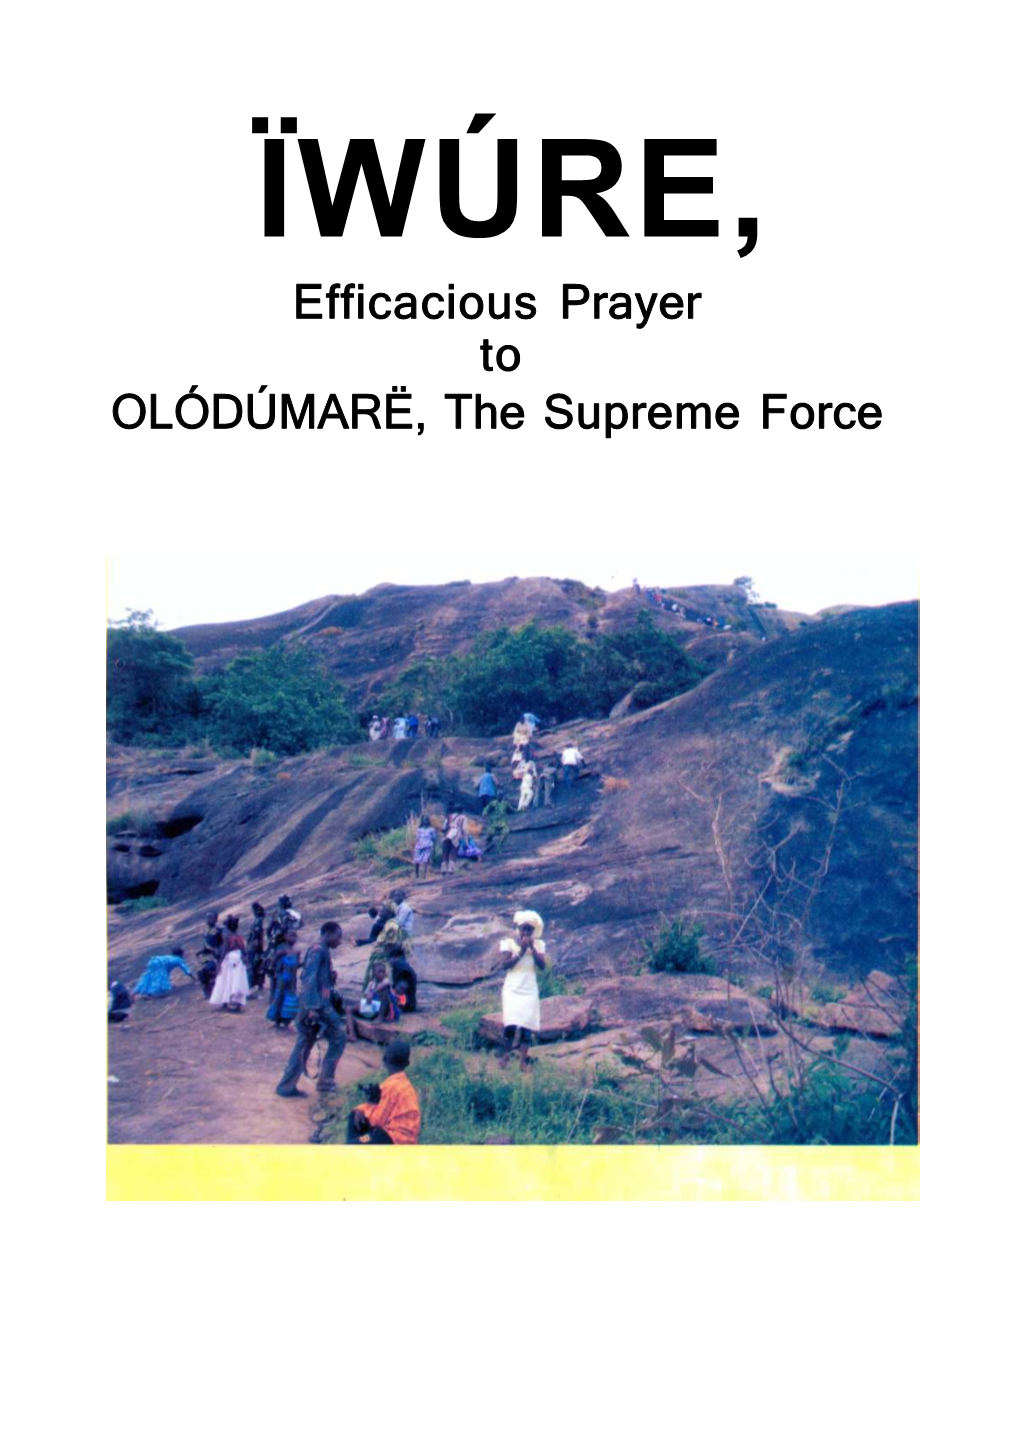 IWÚRE, Efficacious Prayer to OLÓDÚMARË, the Supreme Force